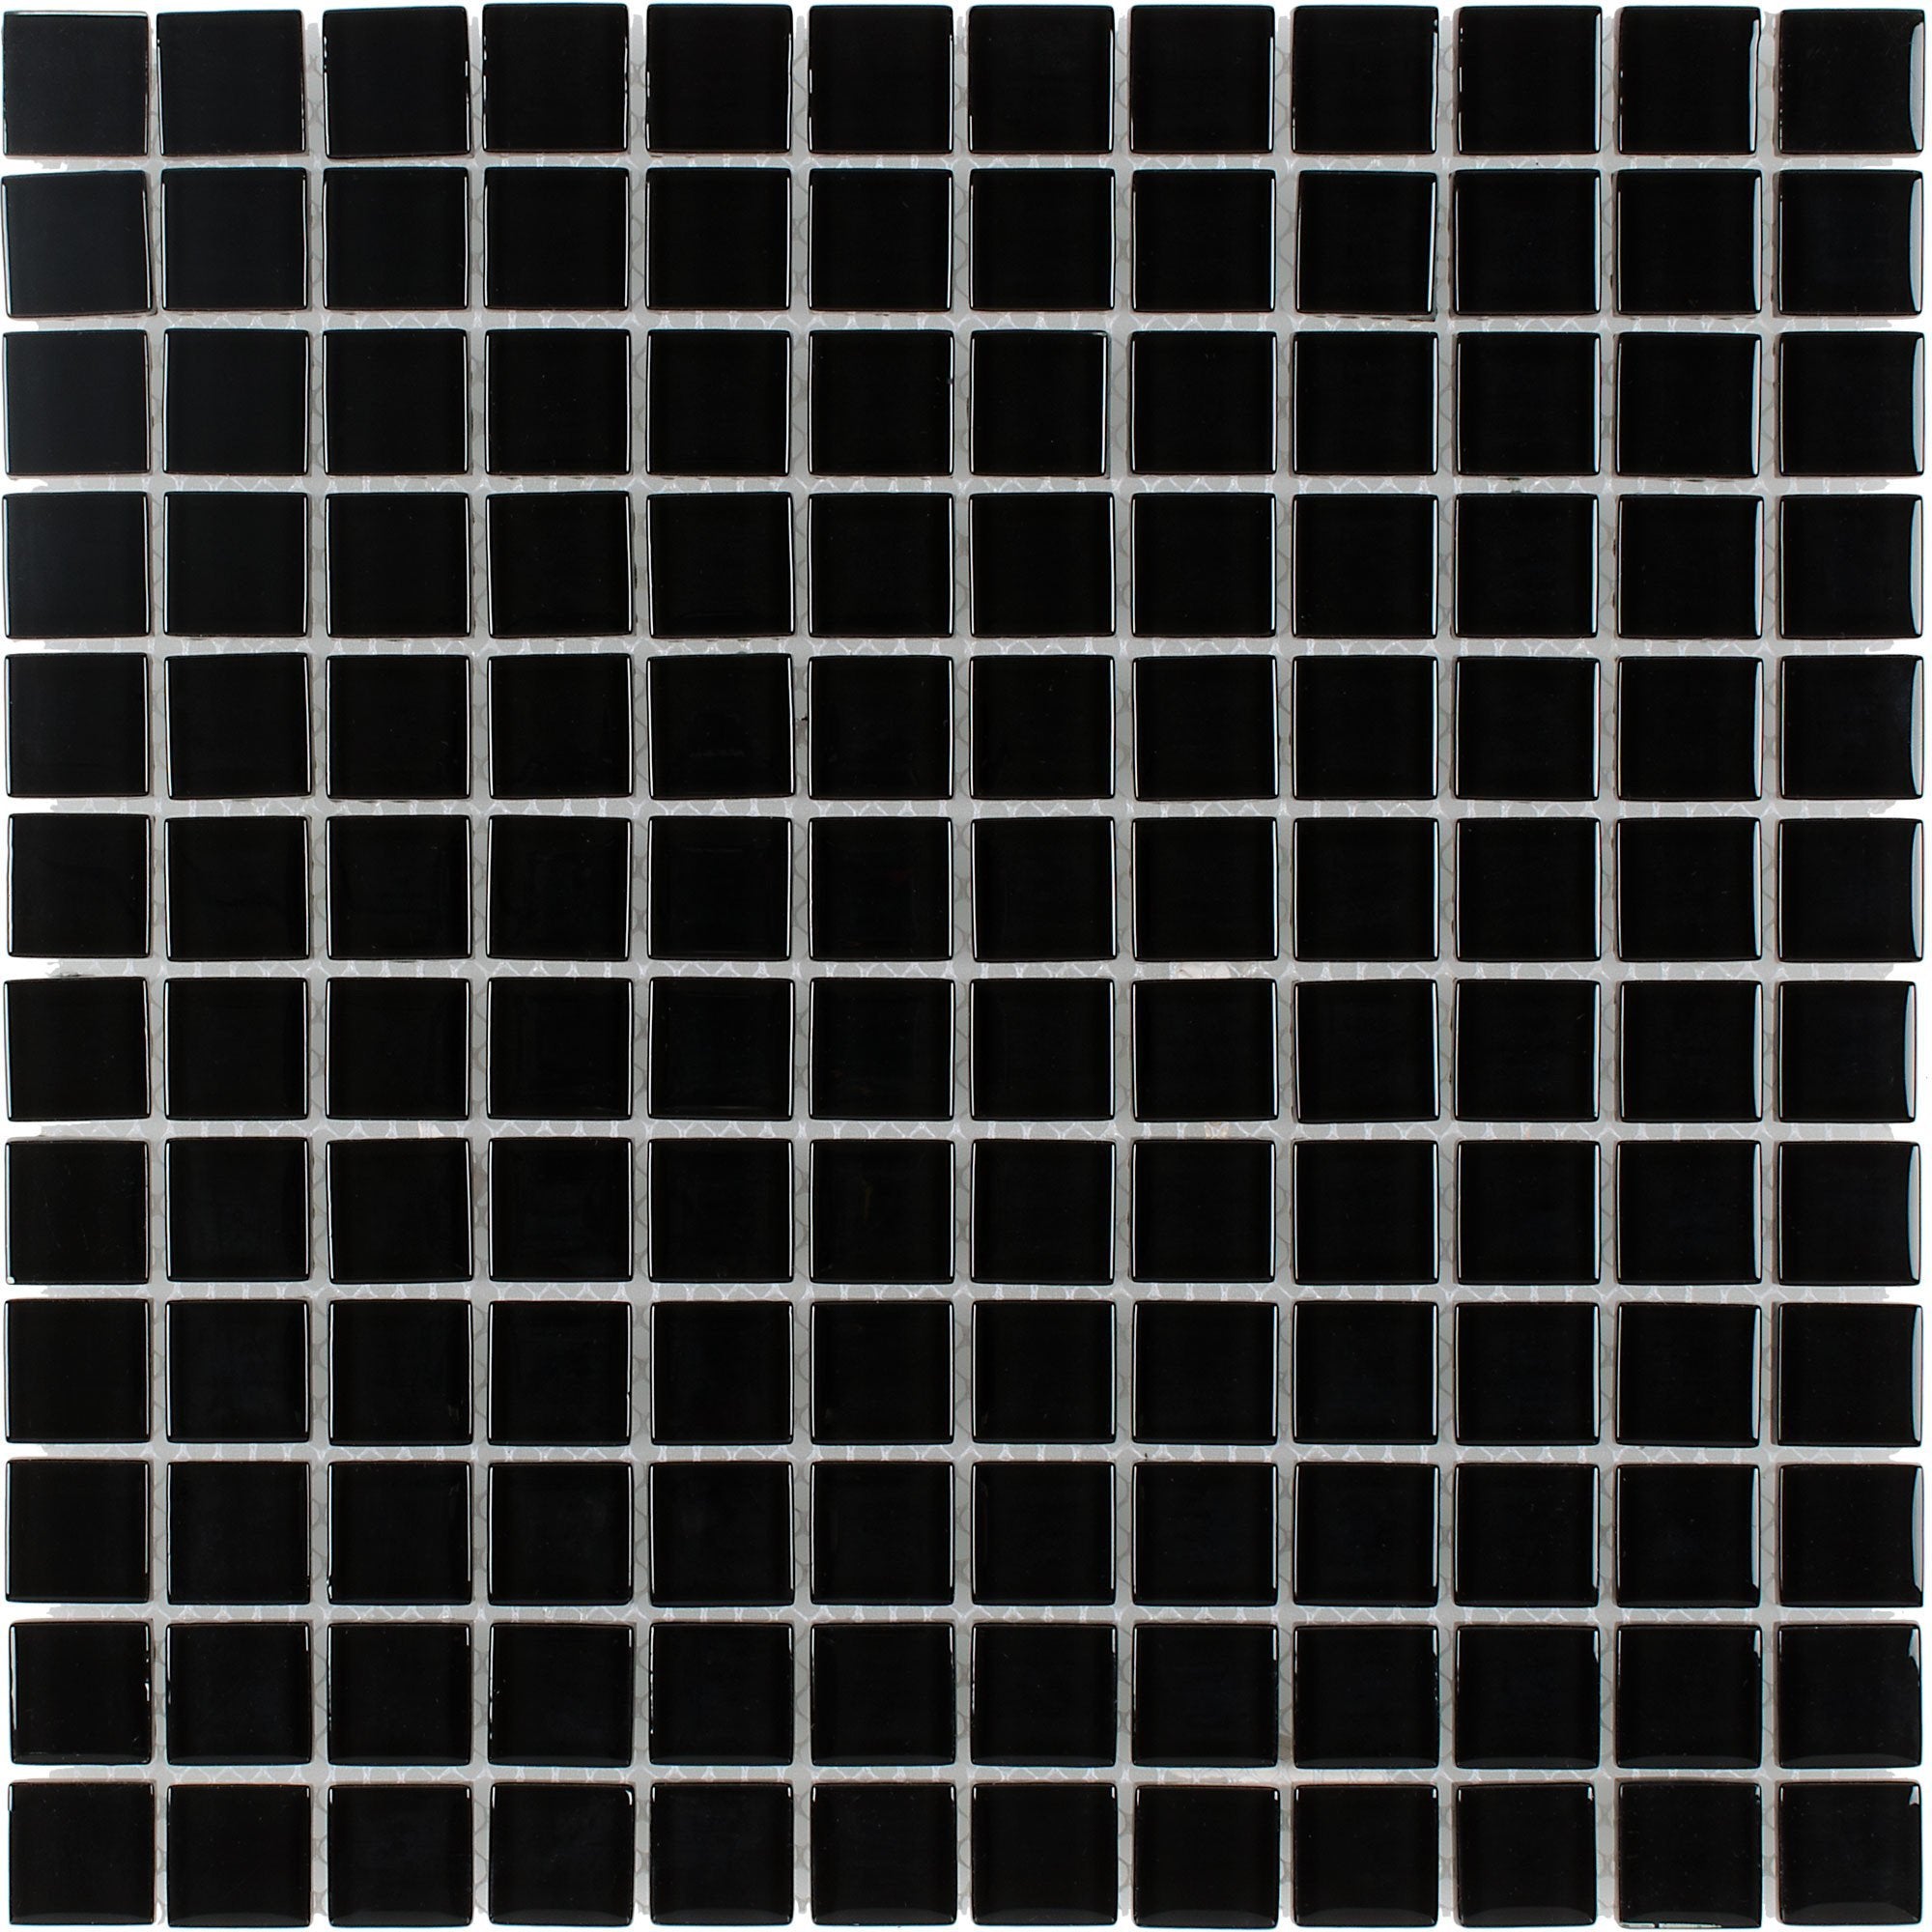 Mosaic Filler, Black, 1000 ml, 1 Bucket